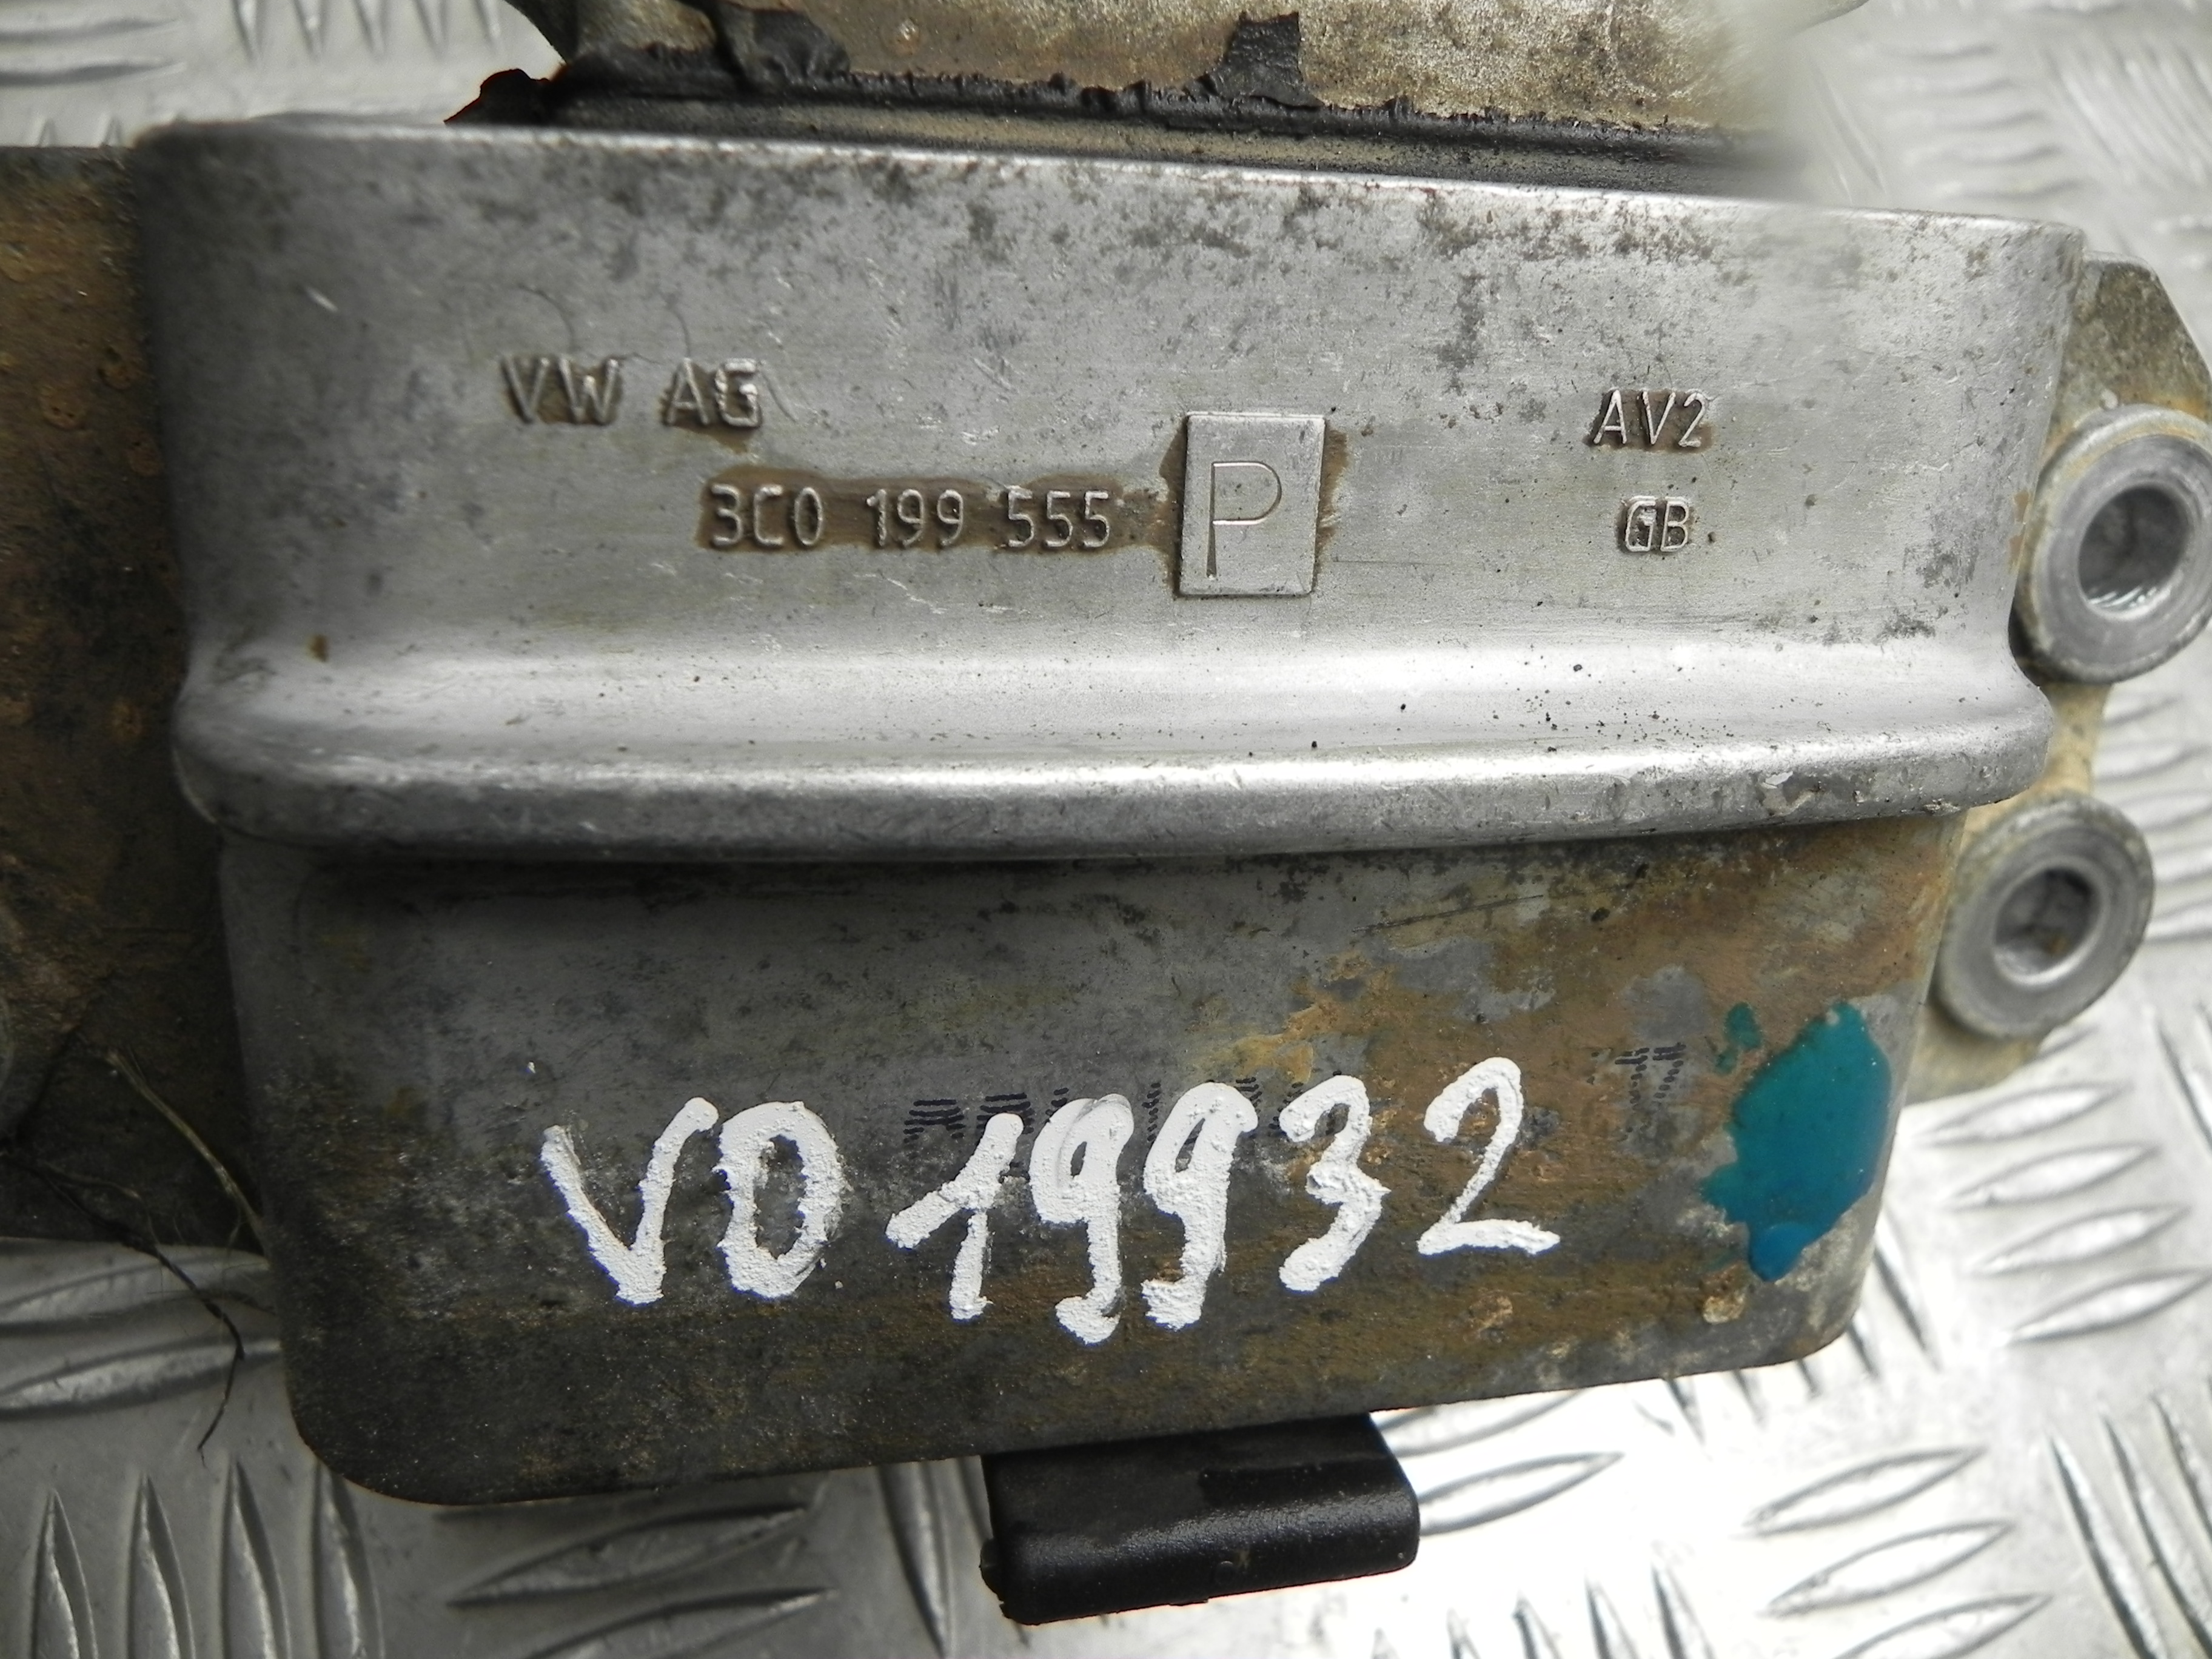 VOLKSWAGEN Passat B7 (2010-2015) Kitos variklio skyriaus detalės 3C0199555P 23441695